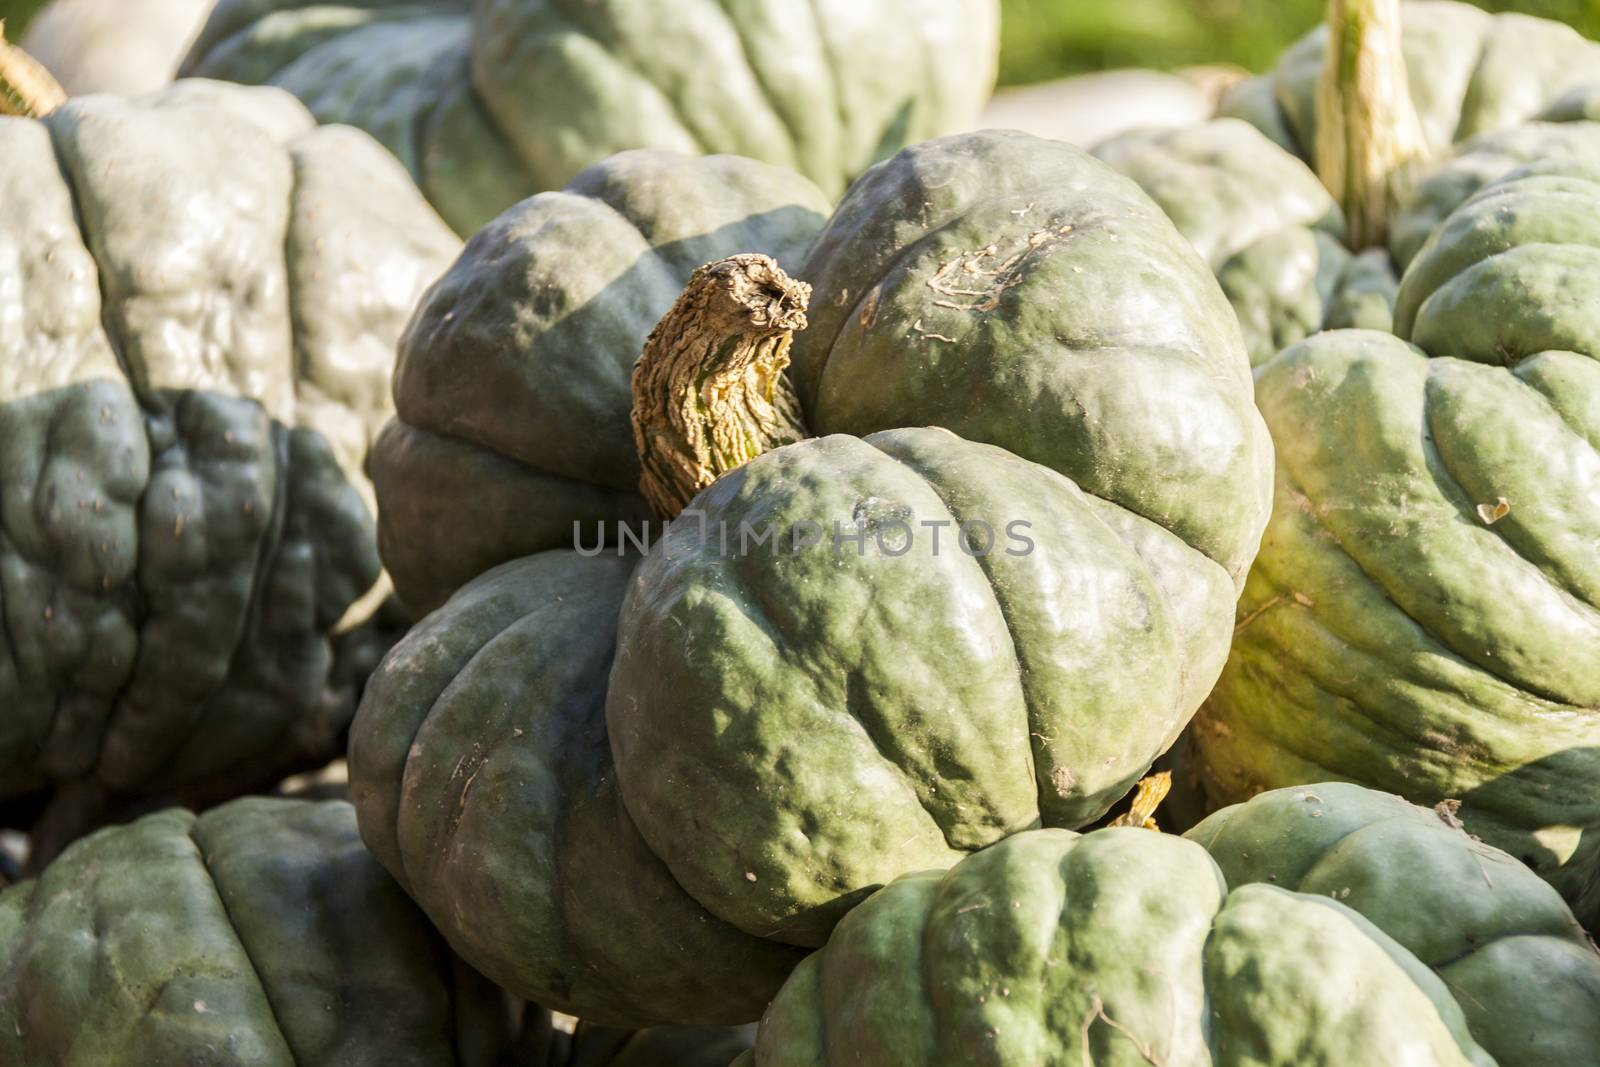 Triamble Tristar cucurbita pumpkin pumpkins from autumn harvest on a market